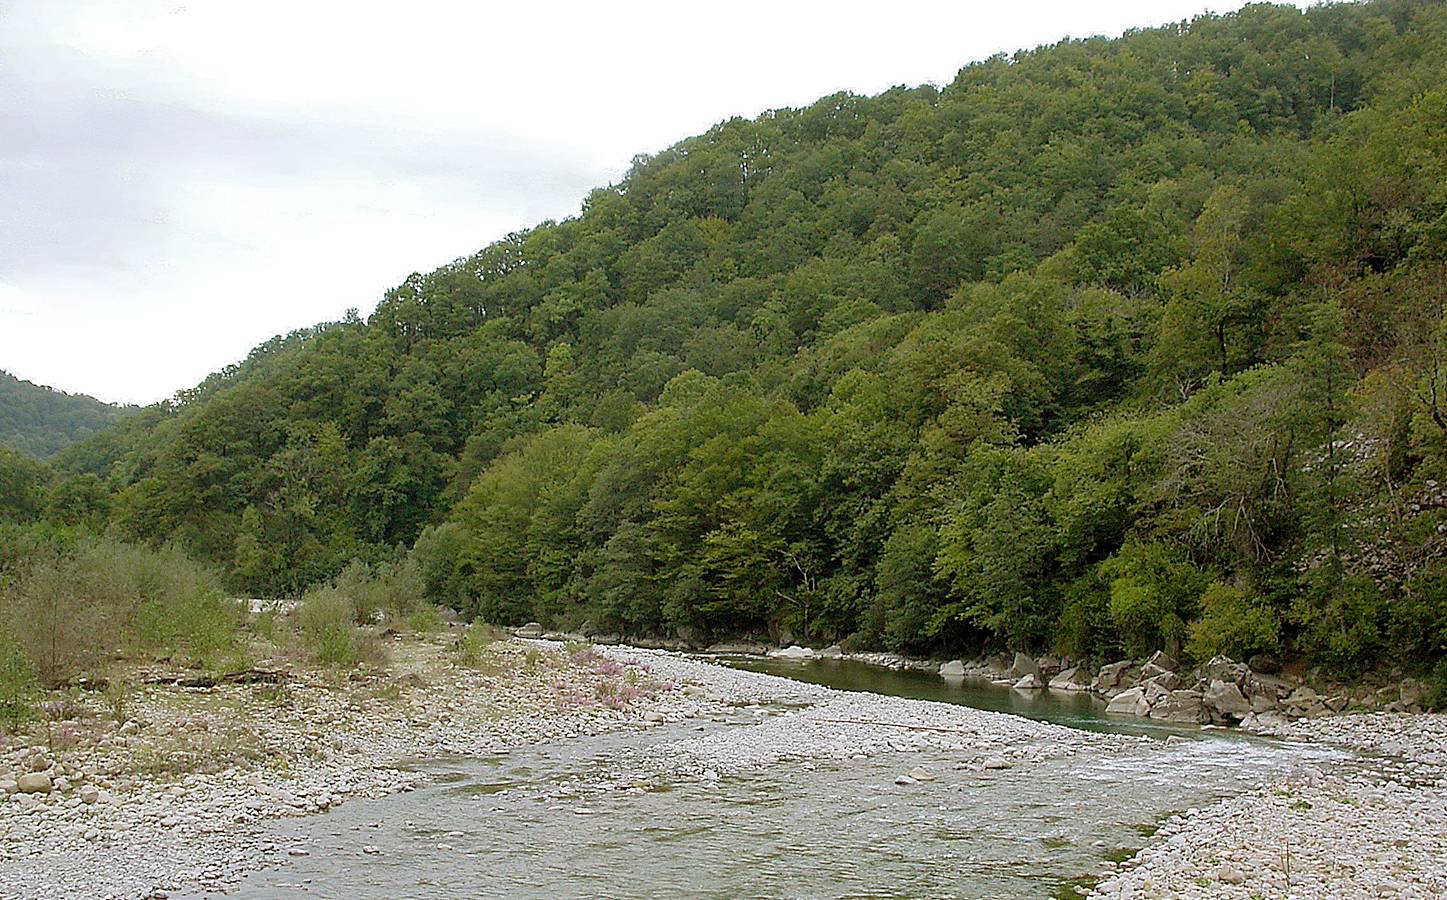 Татьяновка, image of landscape/habitat.